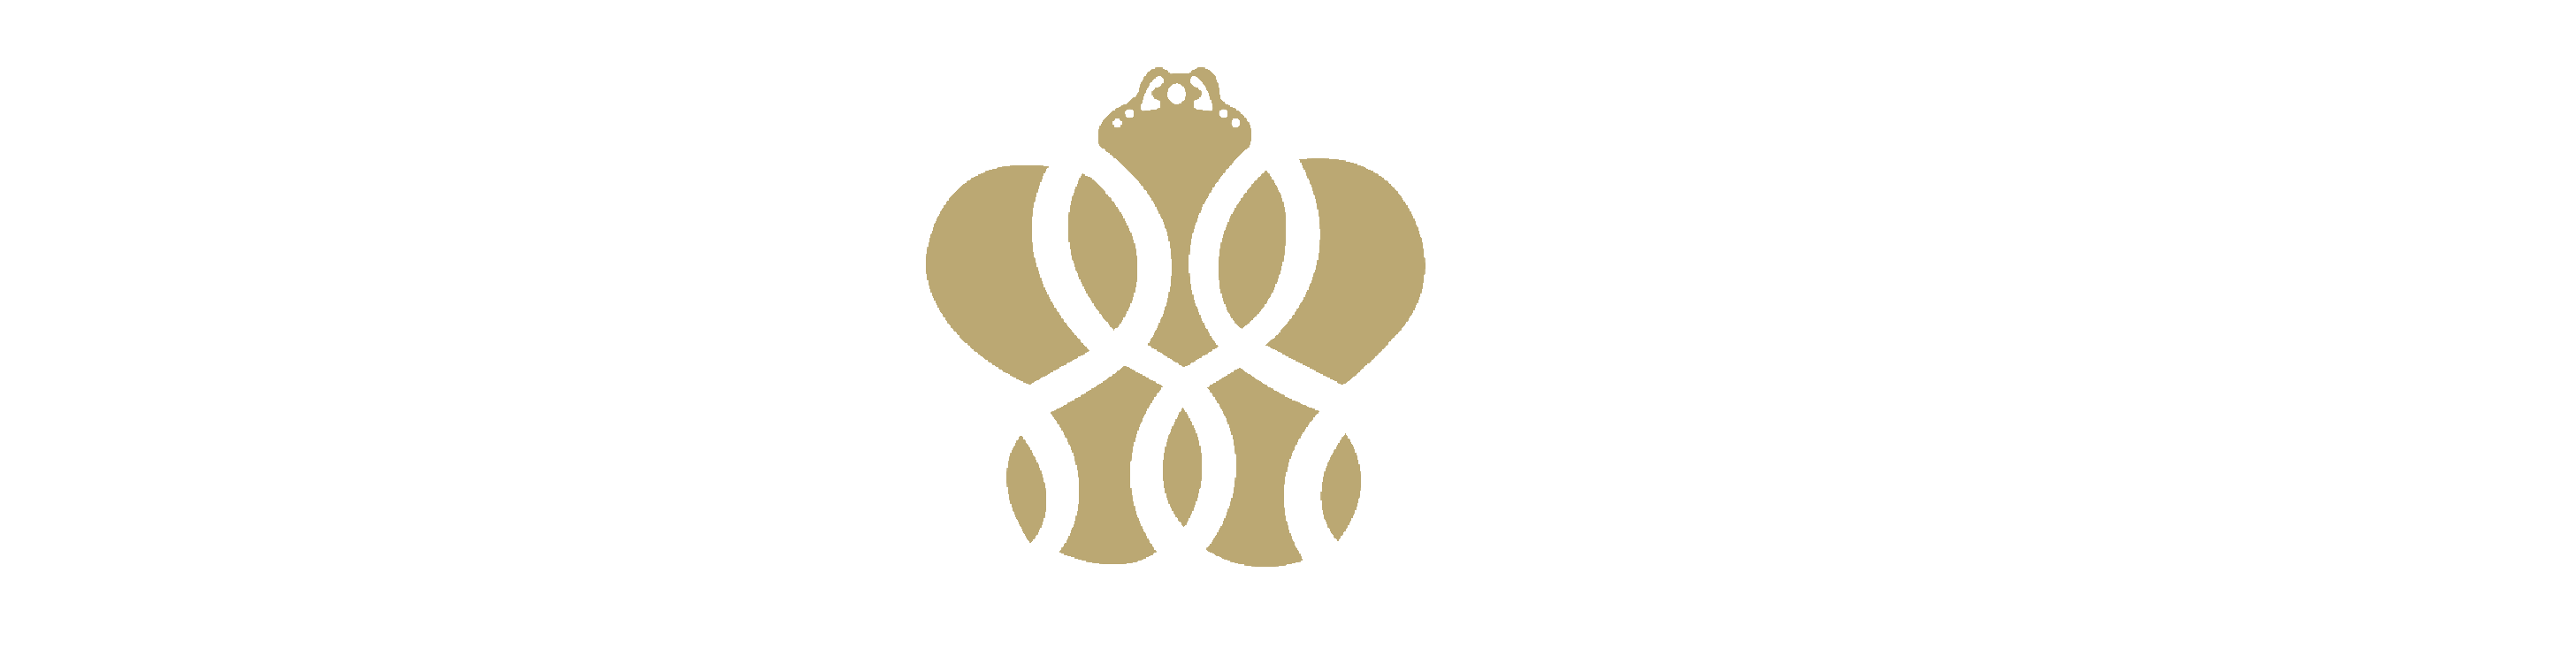 Kapico Travels & Tours |   Tours